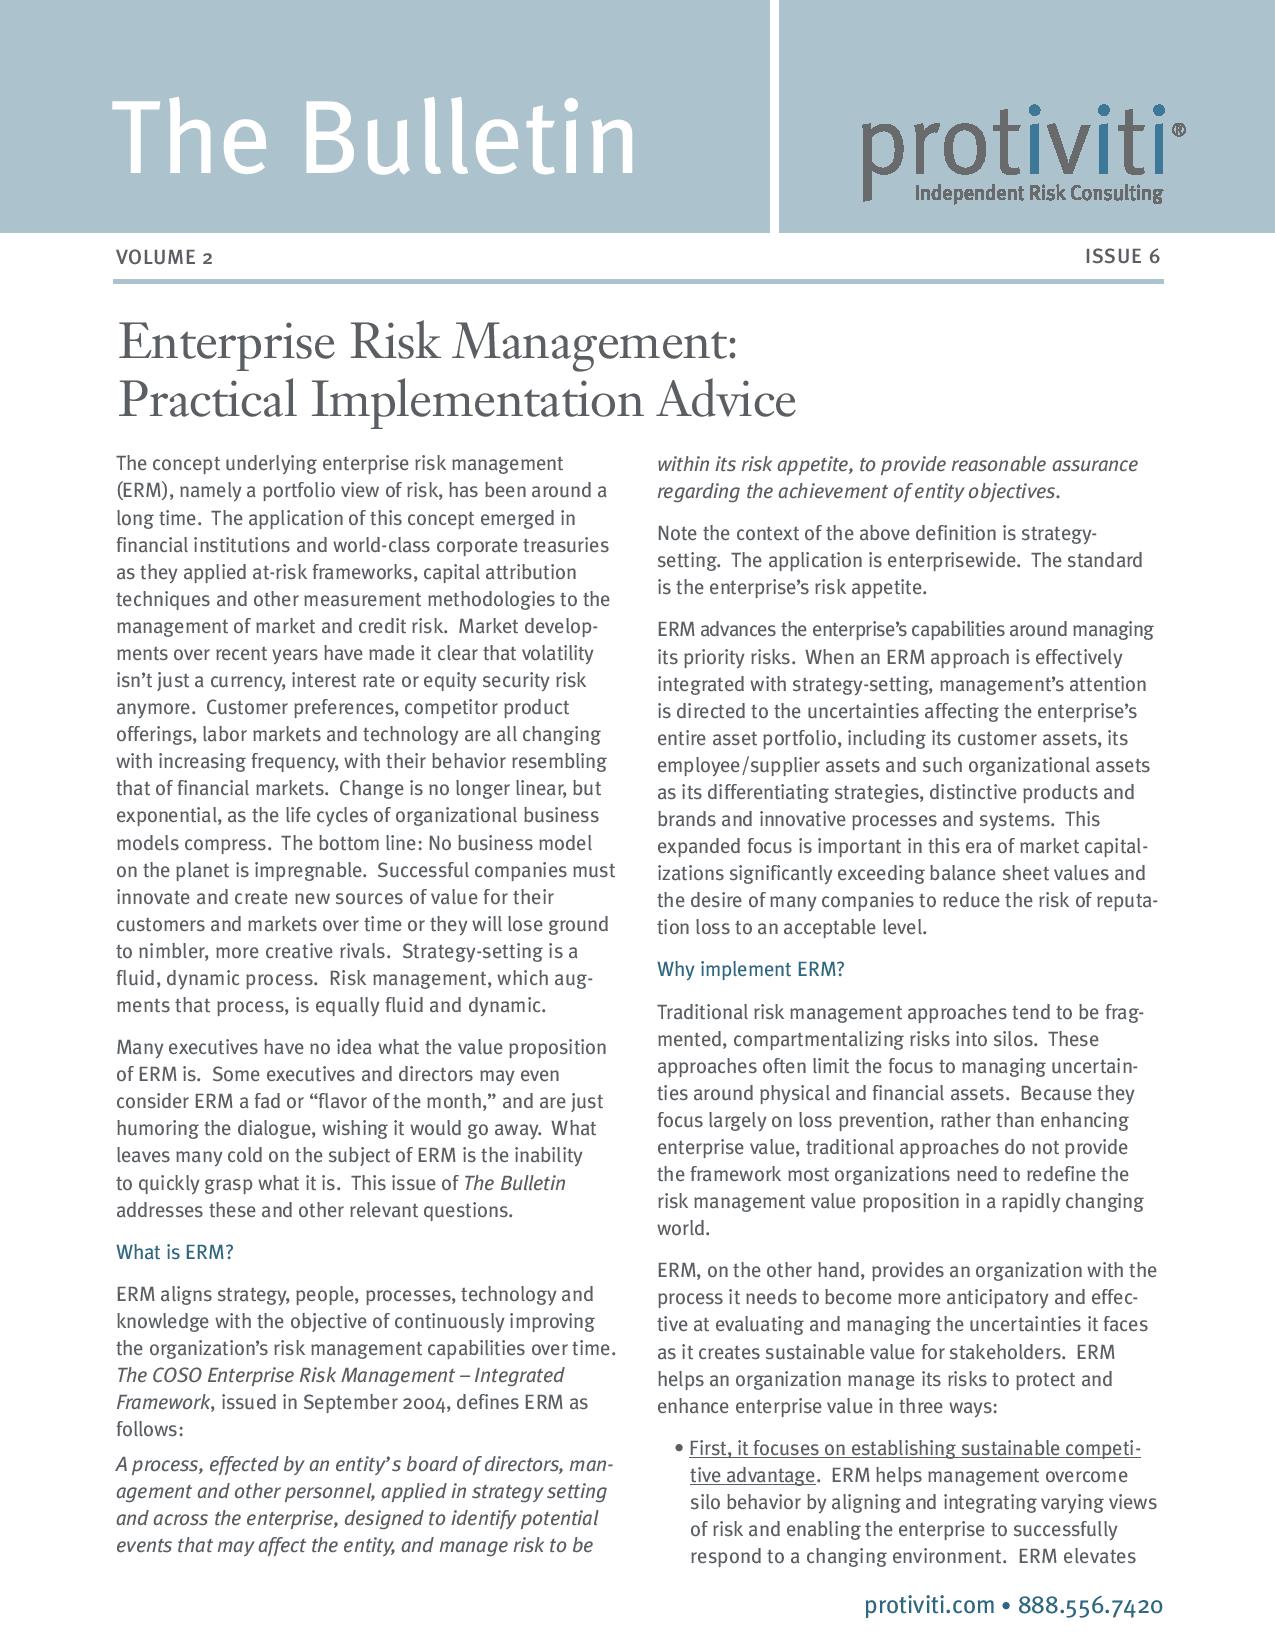 Enterprise Risk Management: Practical Implementation Advice